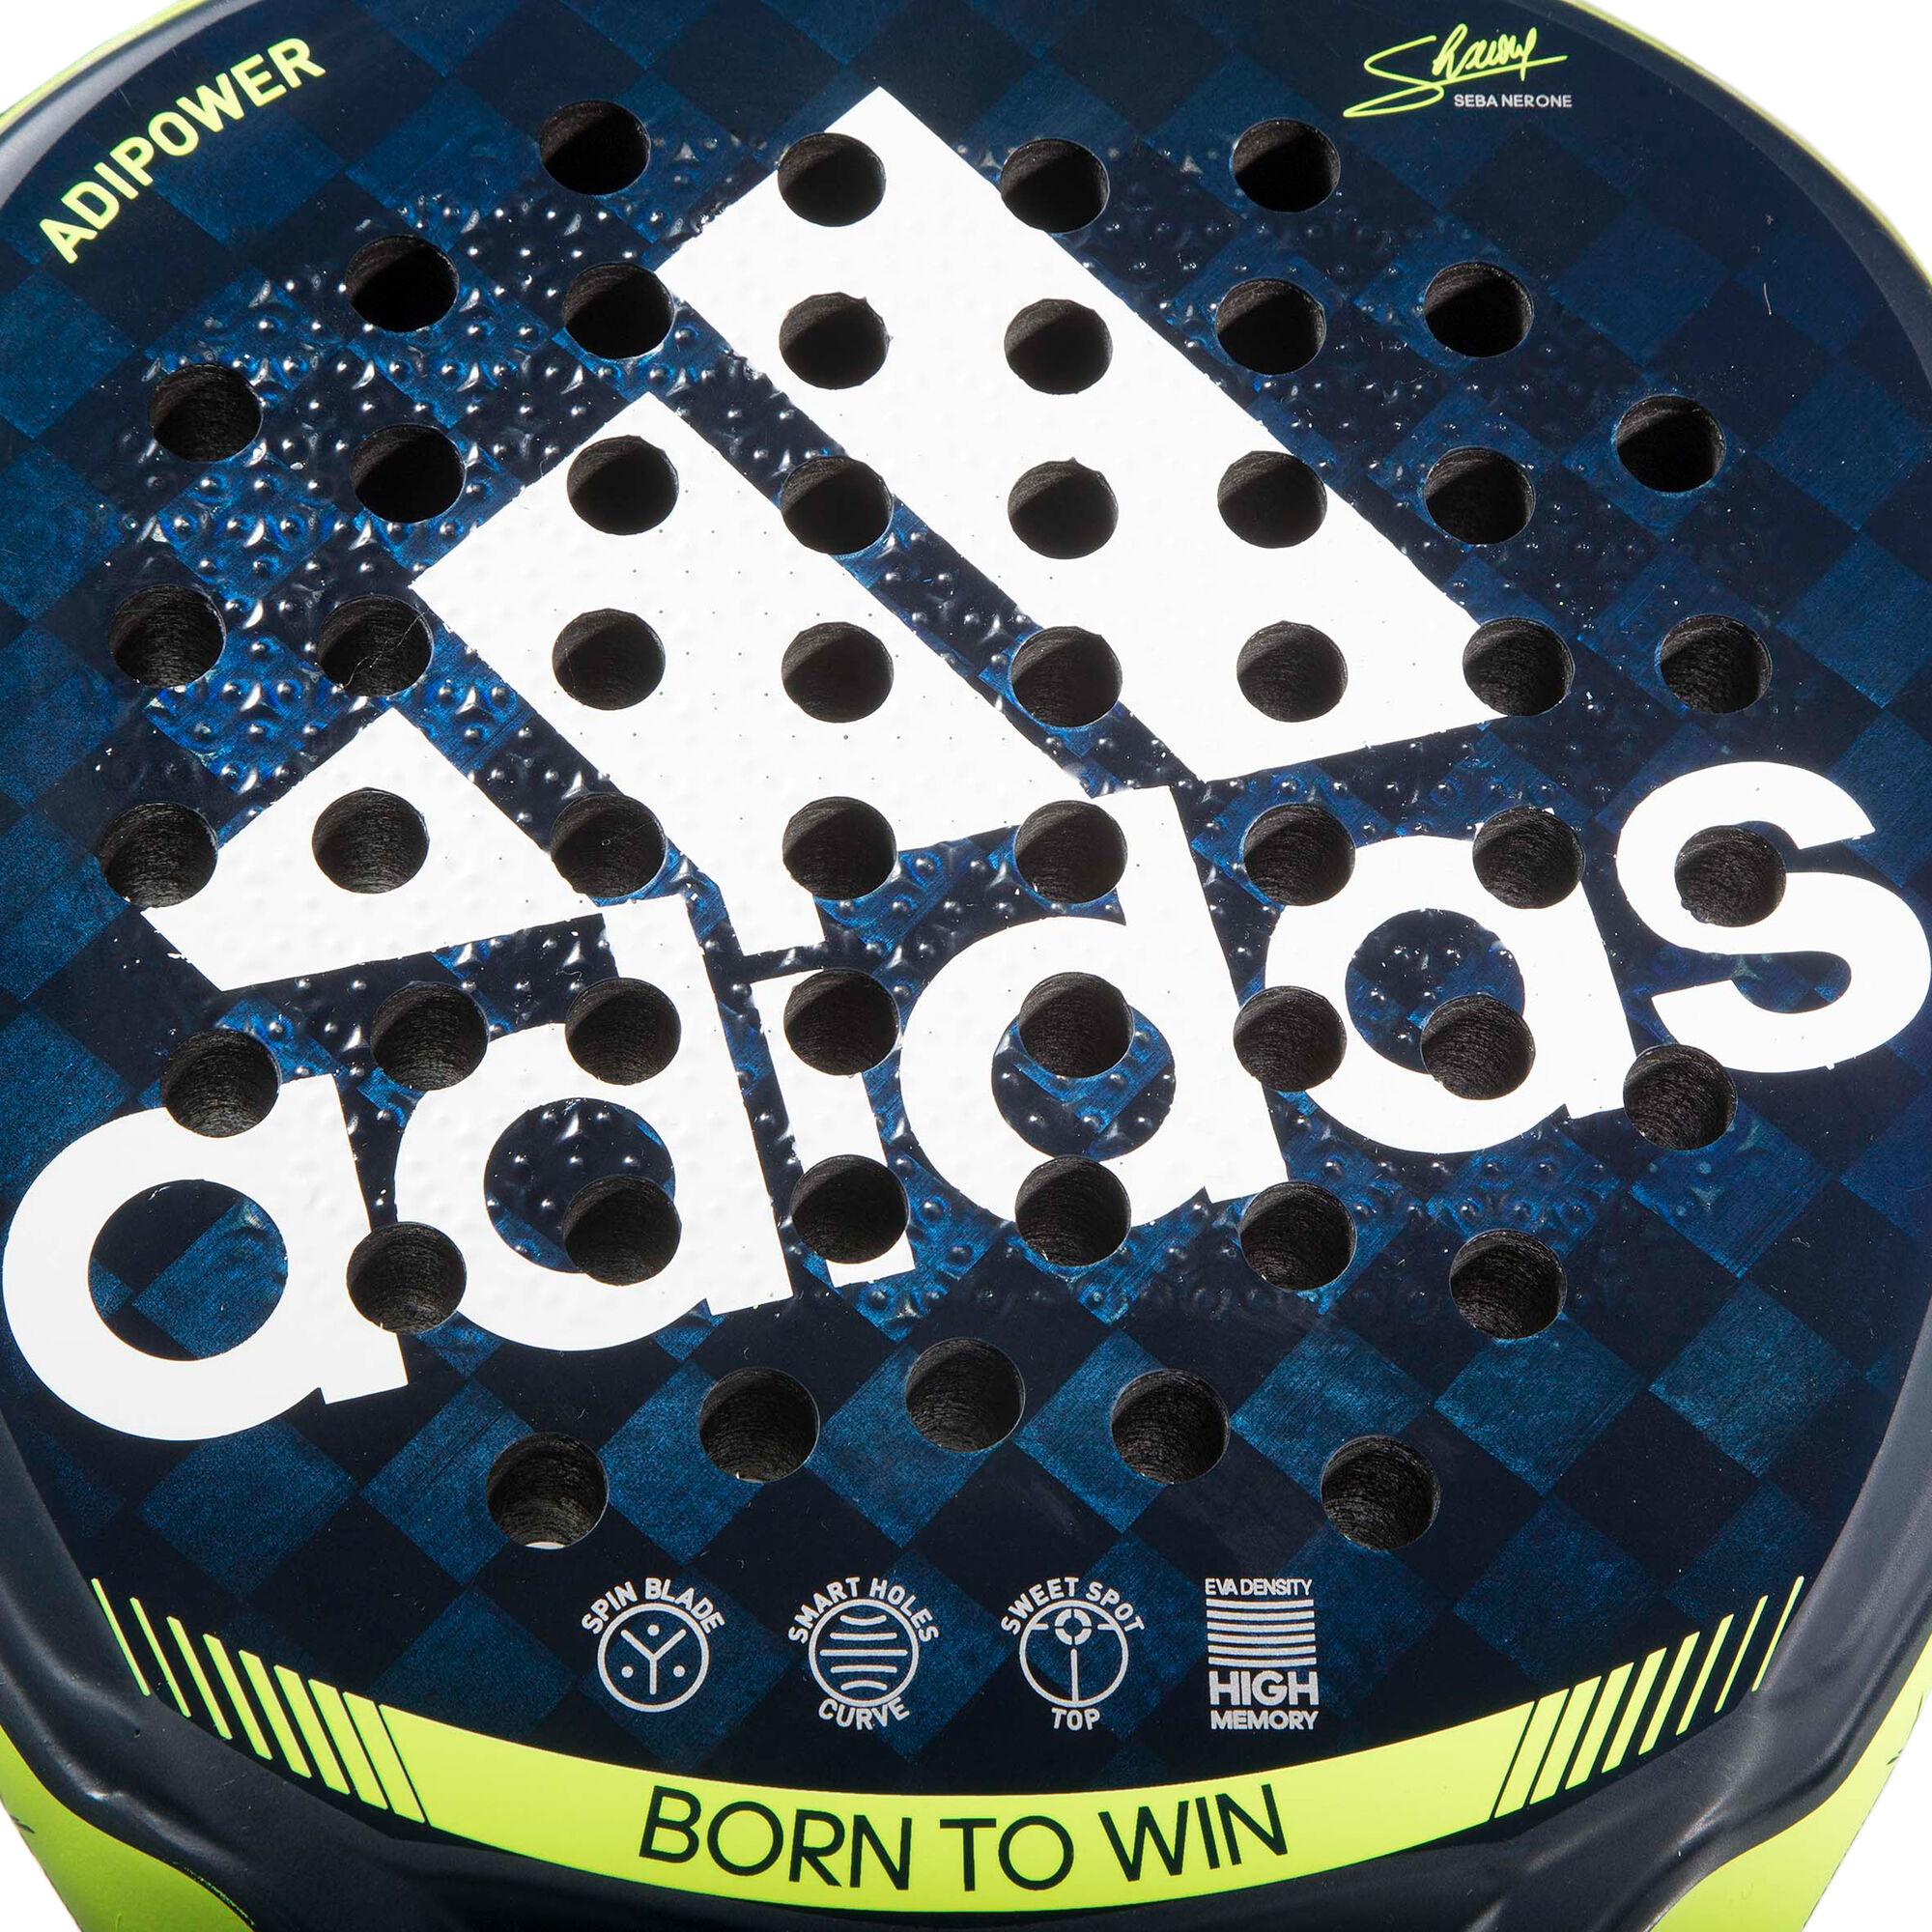 1 raquette de Padel Adidas Adipower achetée 1 offerte - Protennis